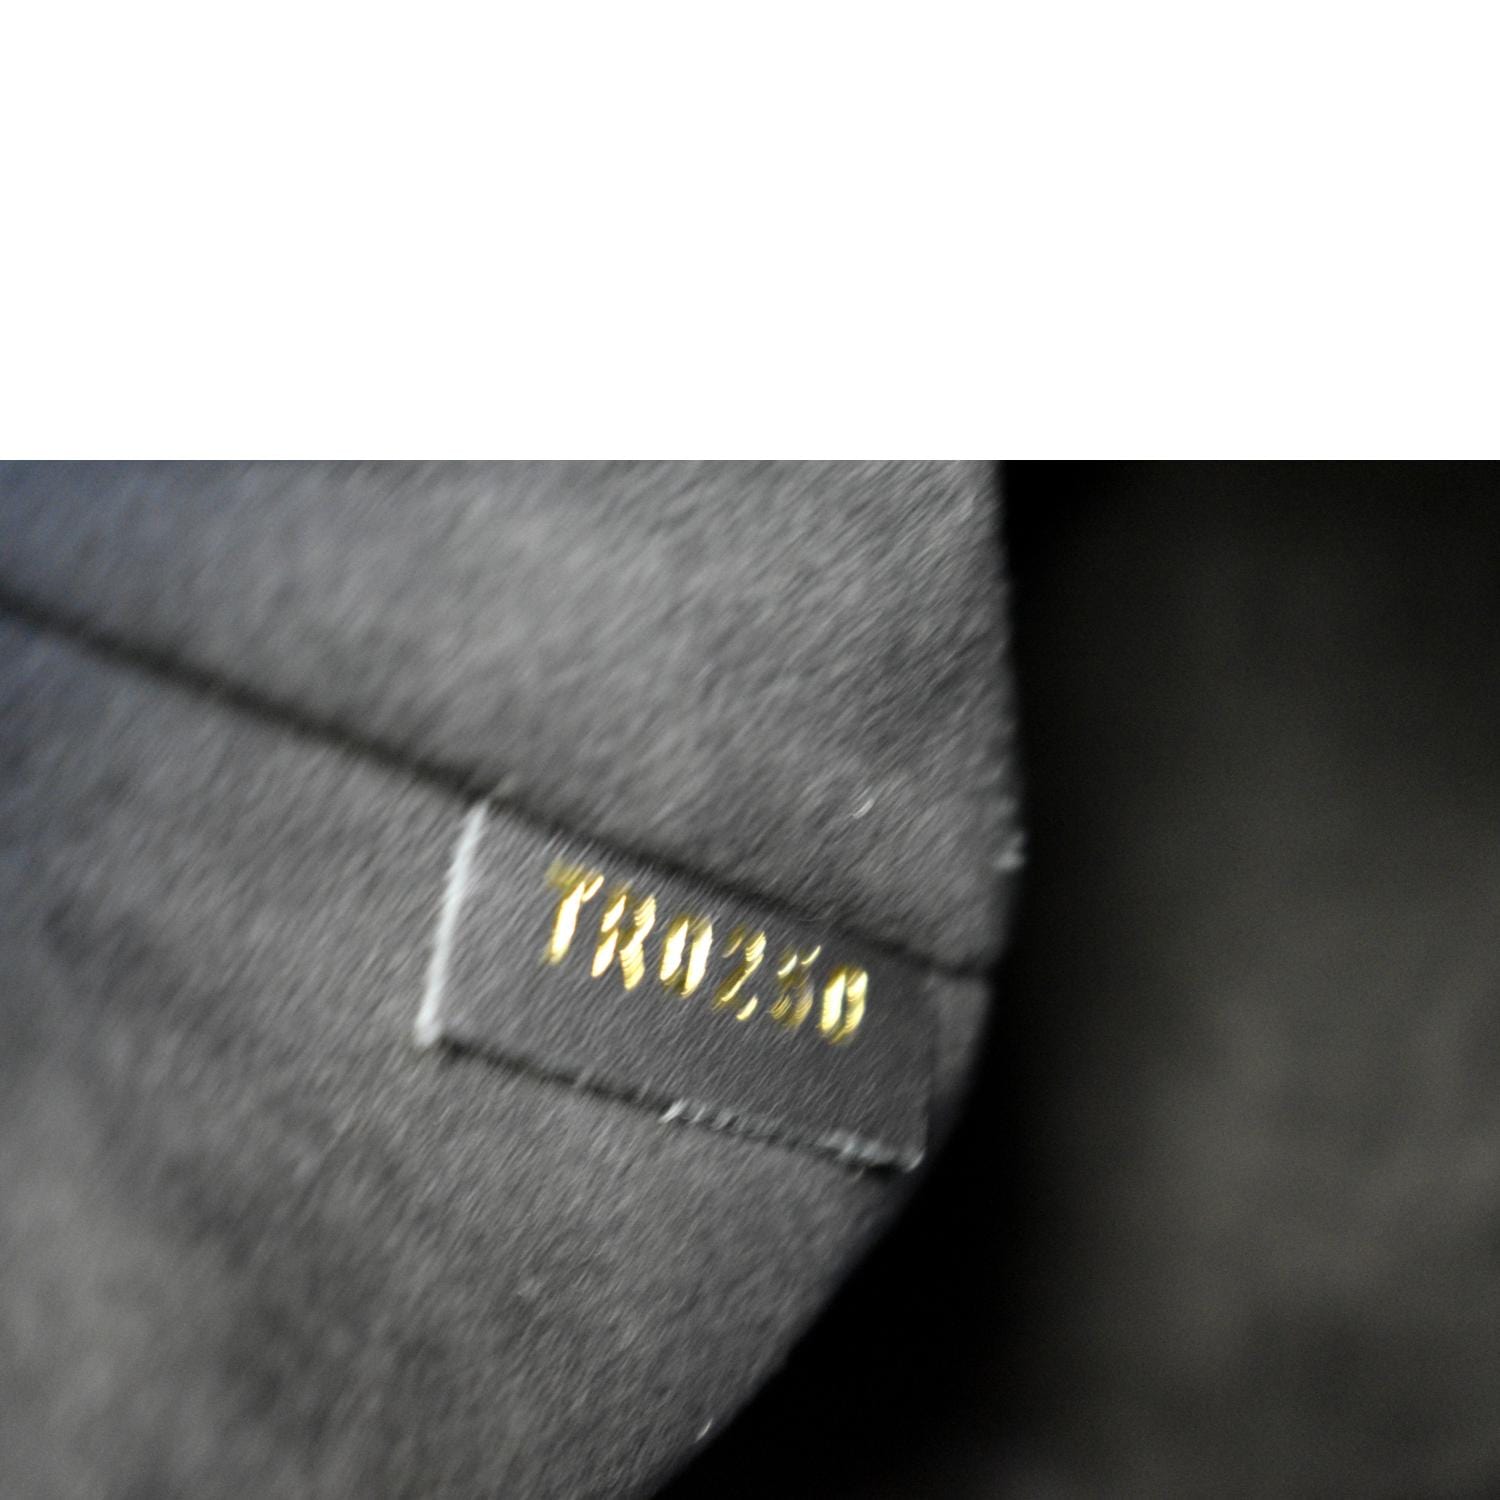 ❤️ TOUR - Louis Vuitton Soufflot MM Monogram shoulder / cross body bag 